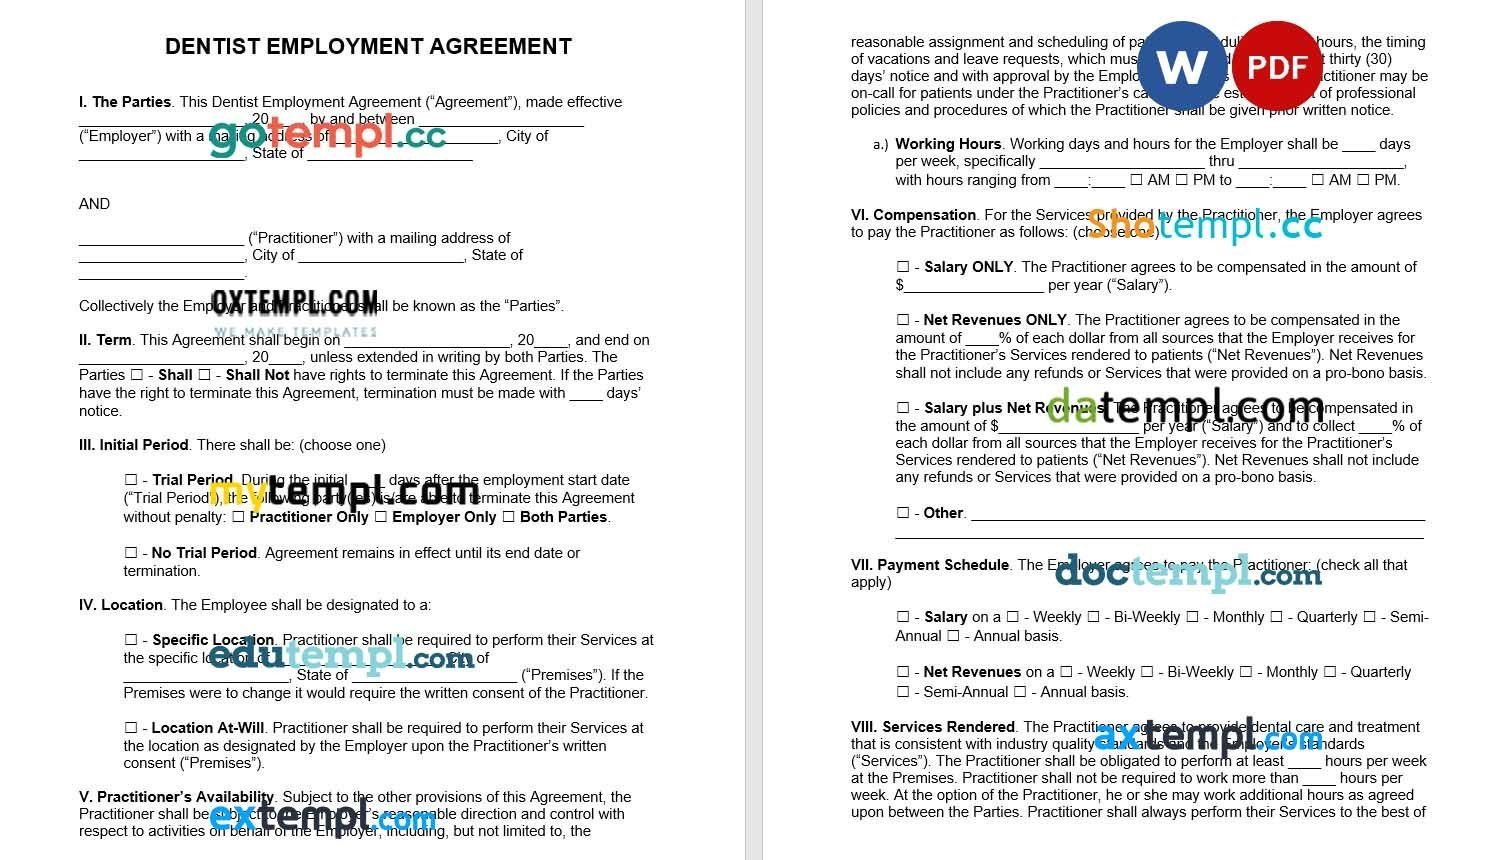 Dentist Employment Agreement Word example, fully editable